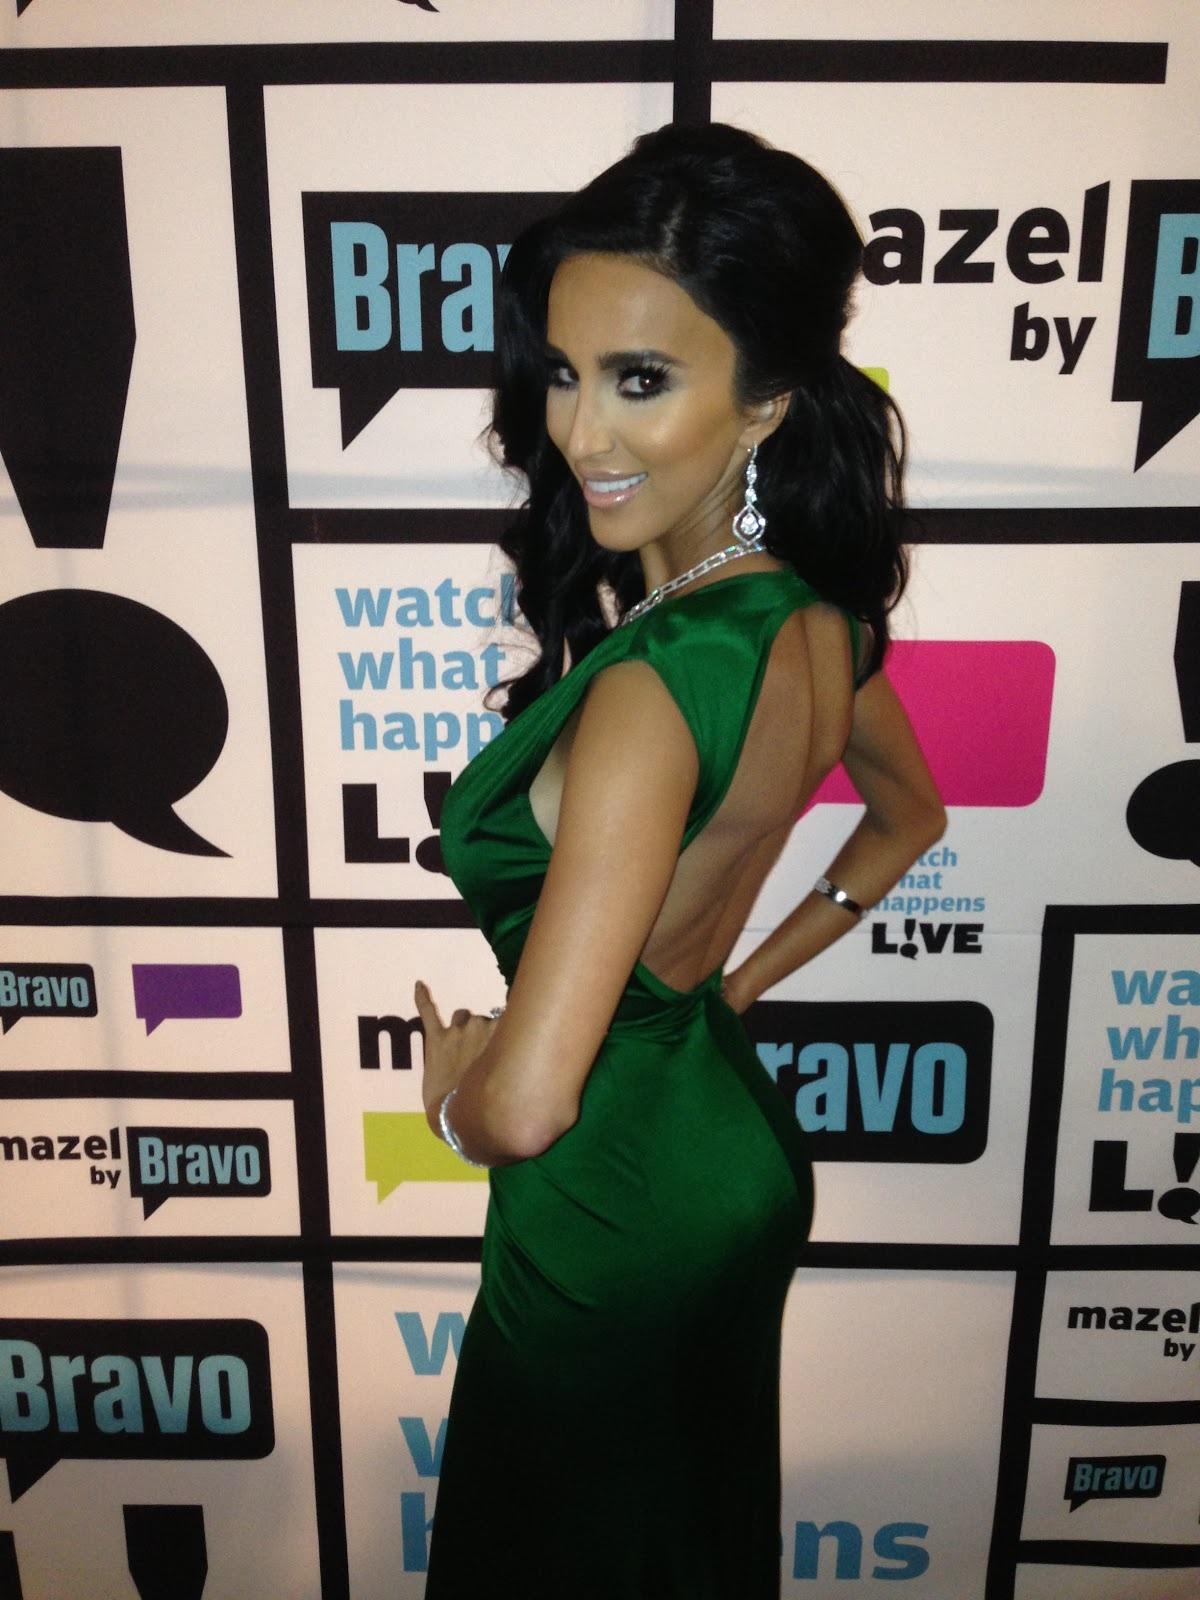 Lilly Ghalichi wearing a green dress